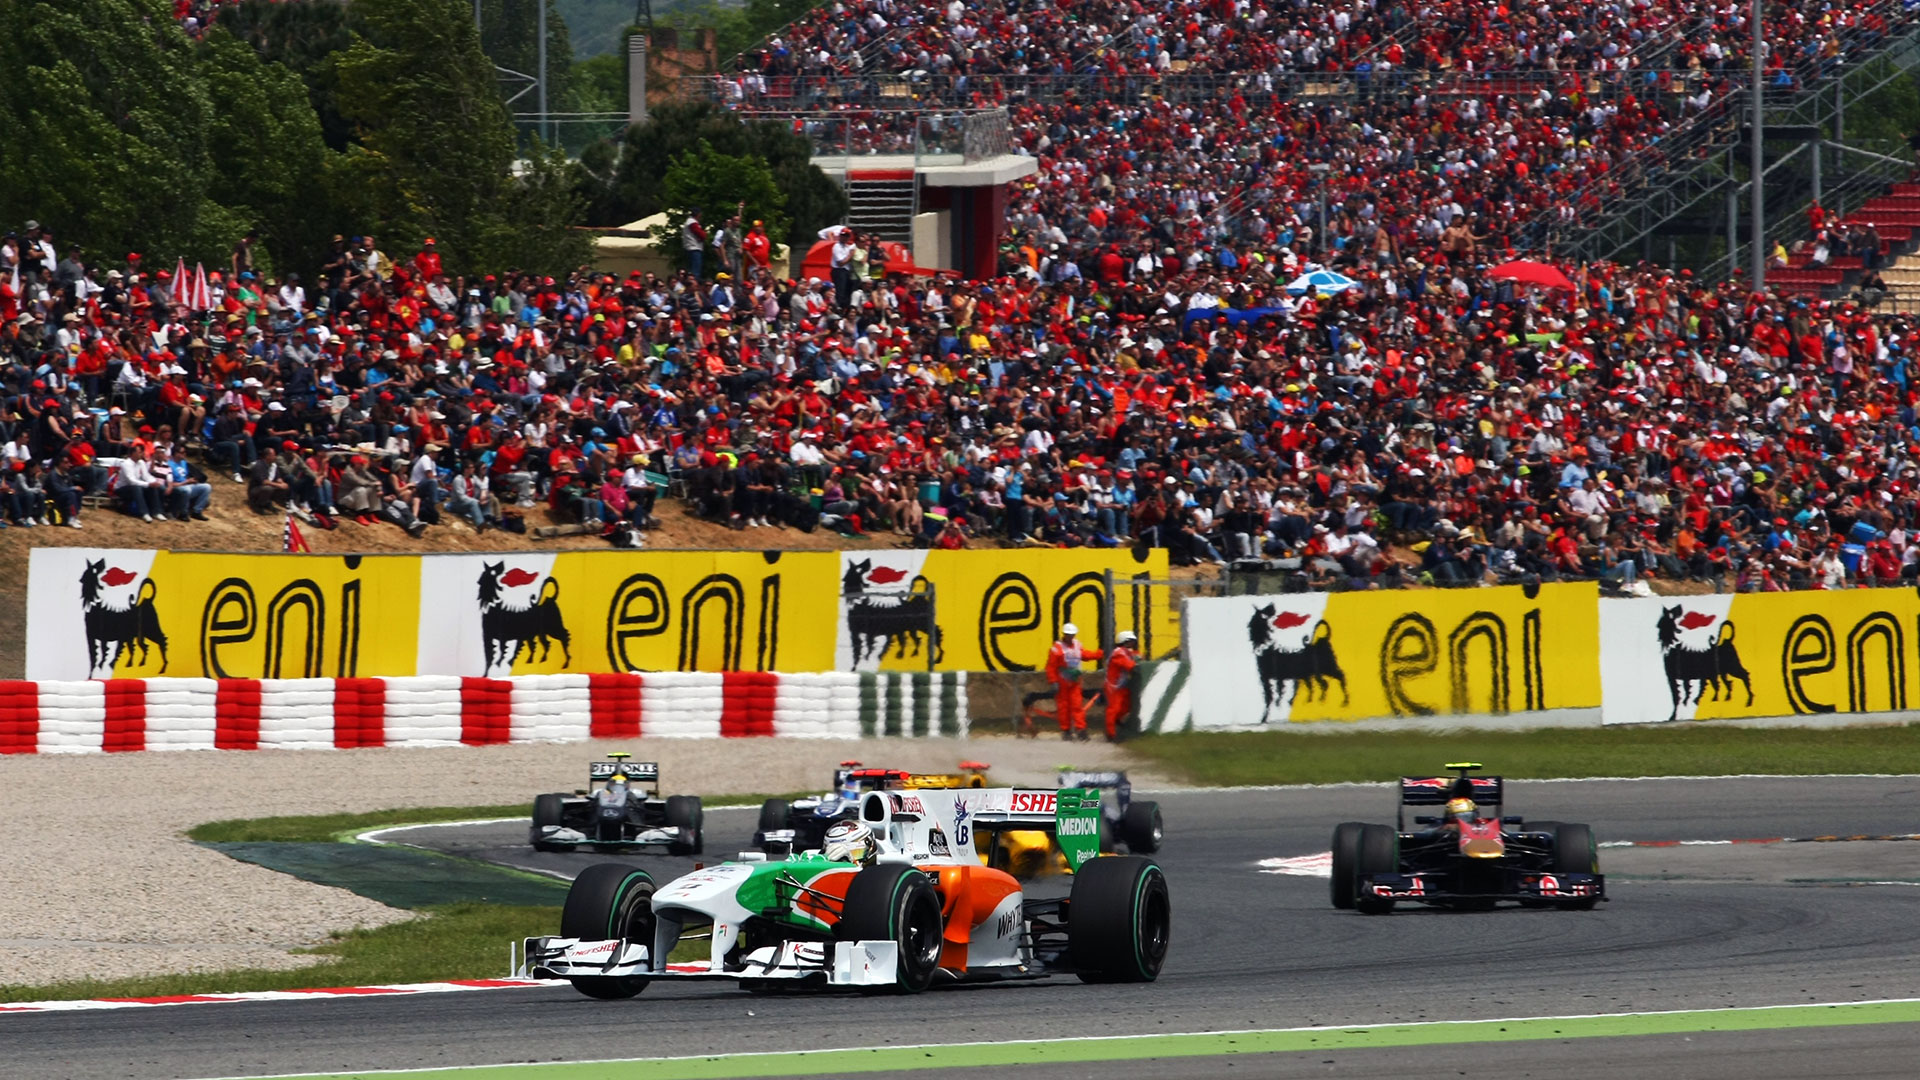 HD Wallpaper Formula Grand Prix Of Spain F1 Fansite